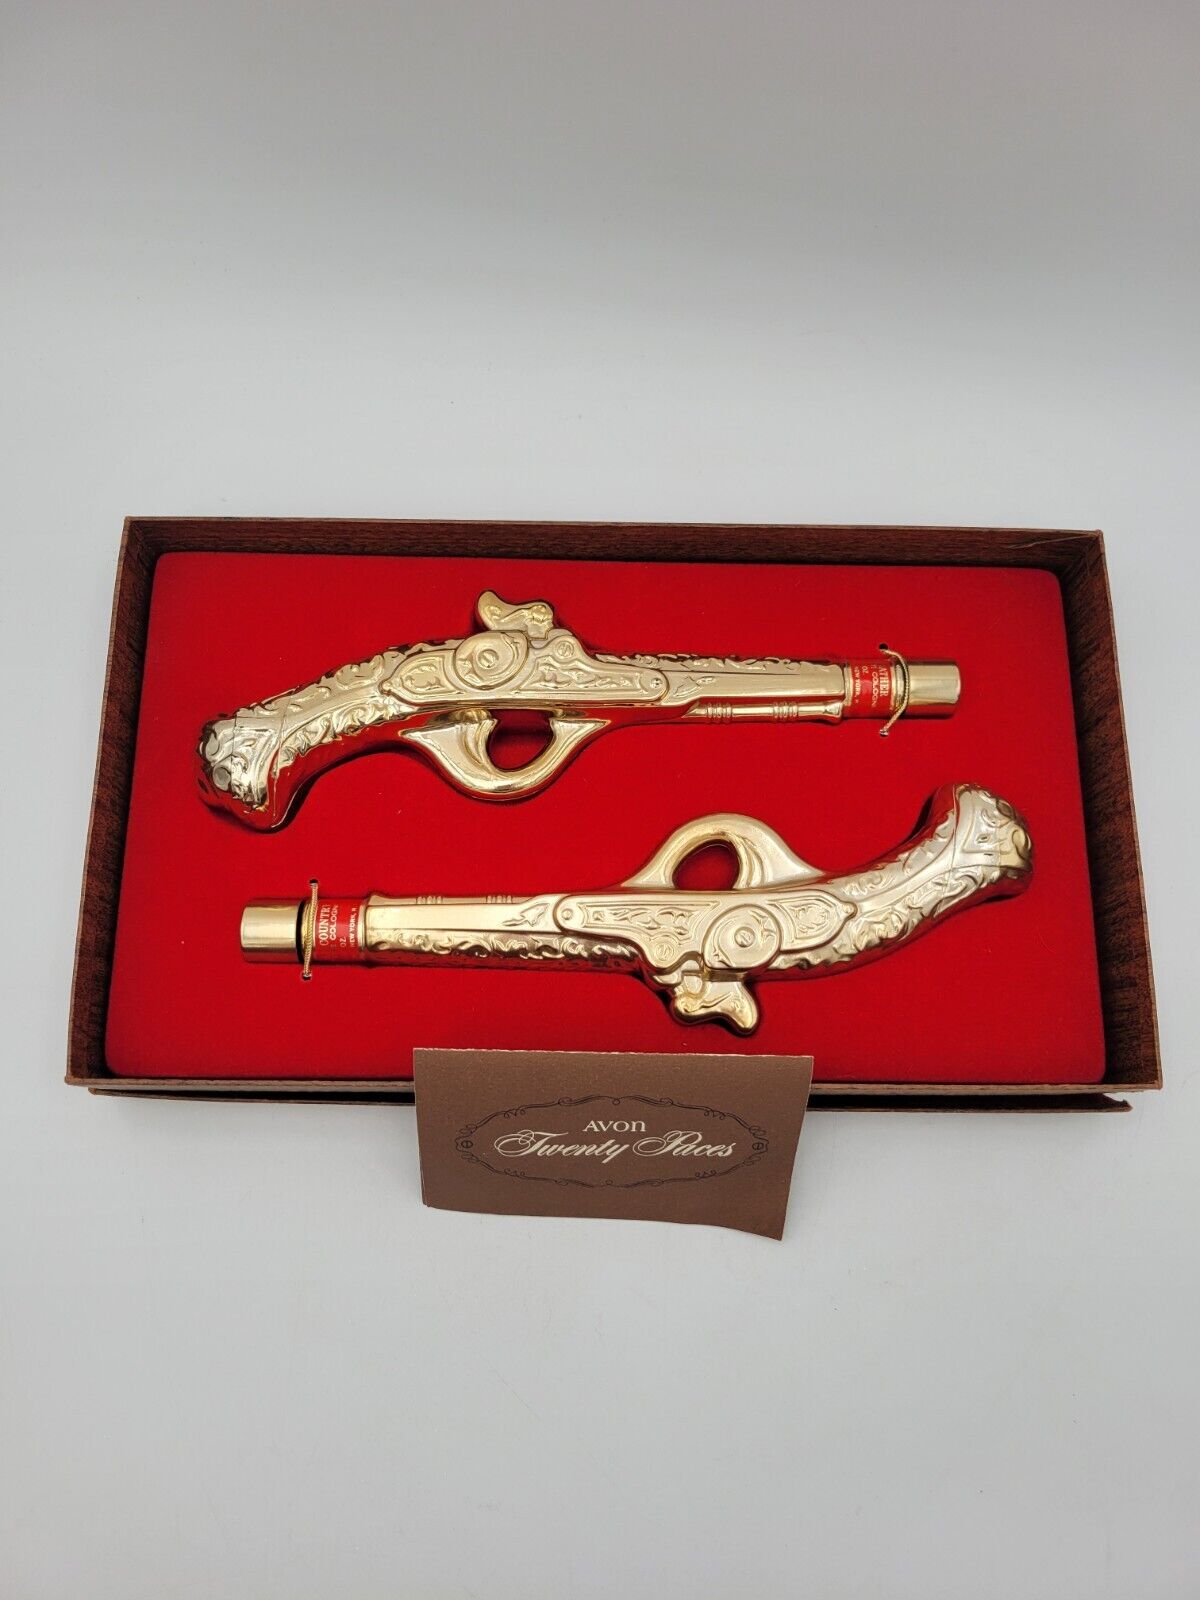 Vintage Avon Twenty Paces Dueling Pistols With Colognes In Original Box